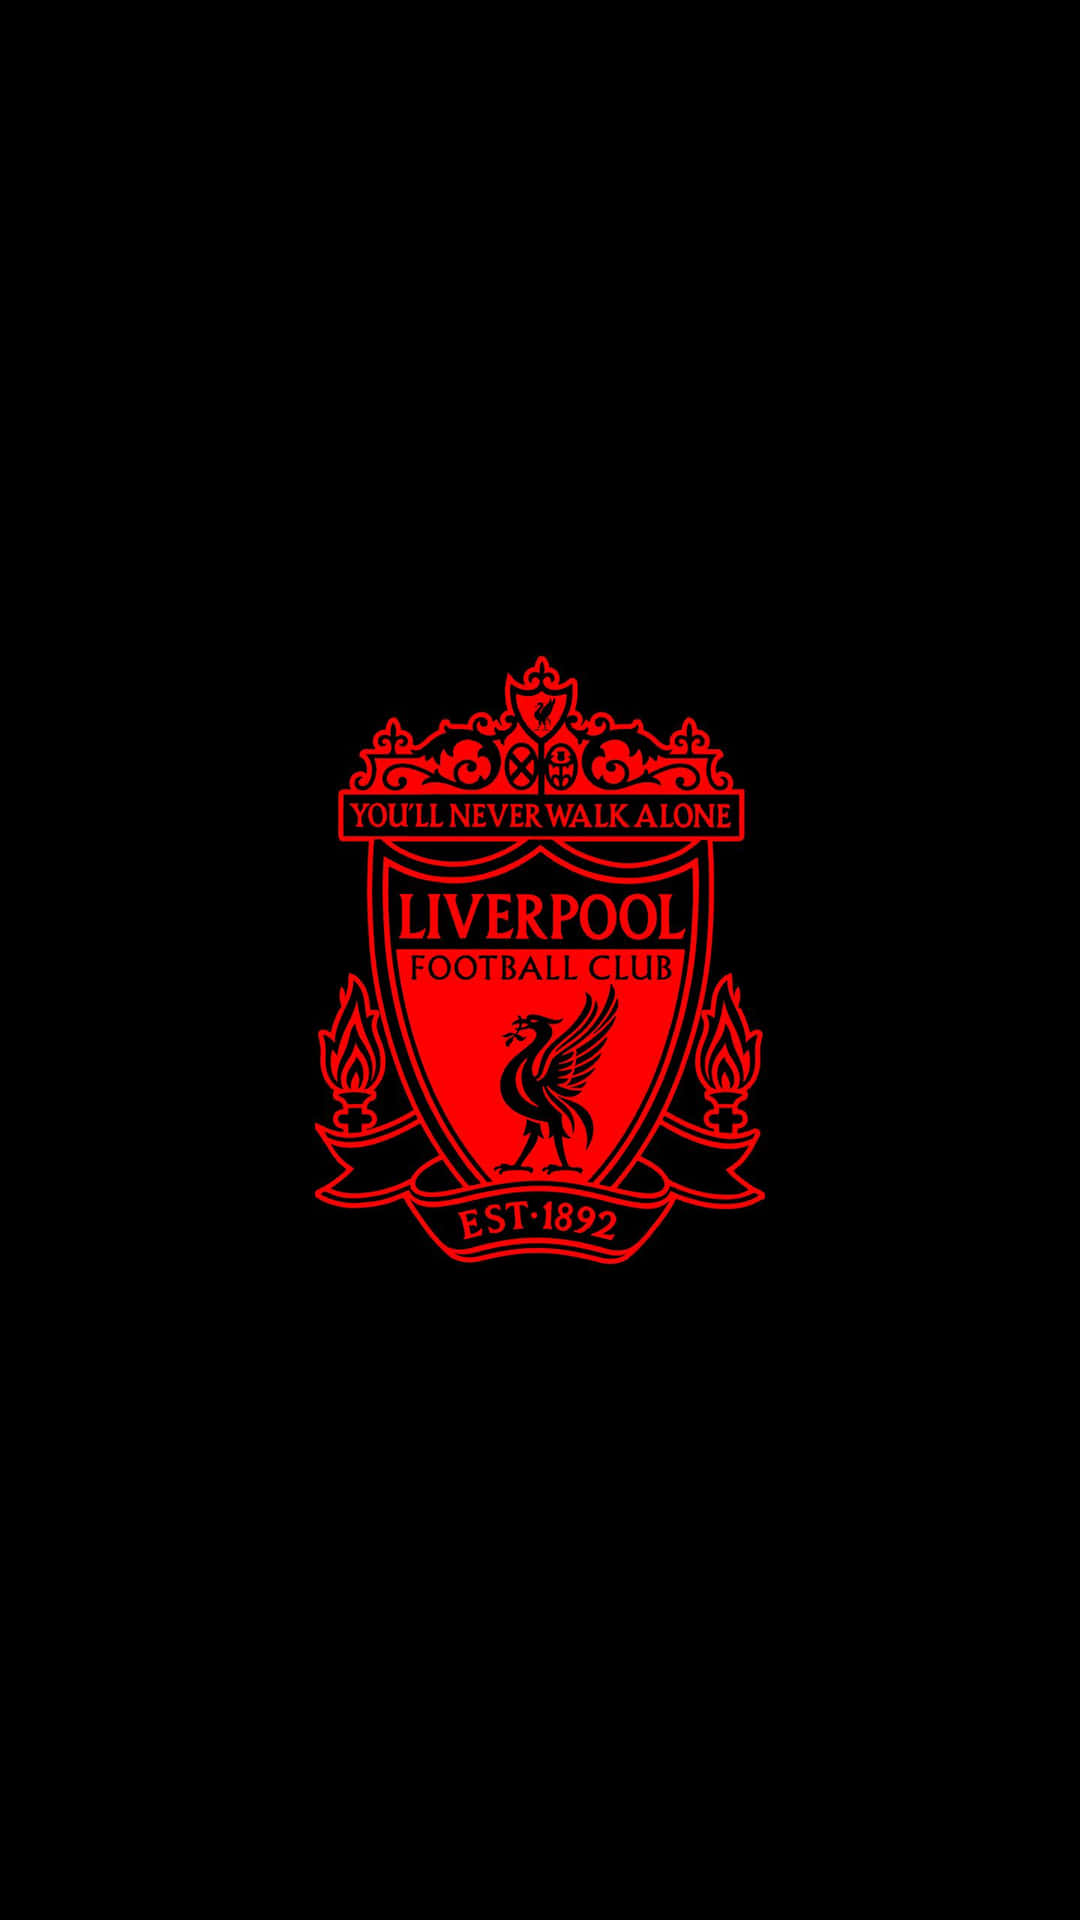 Liverpoolbilder